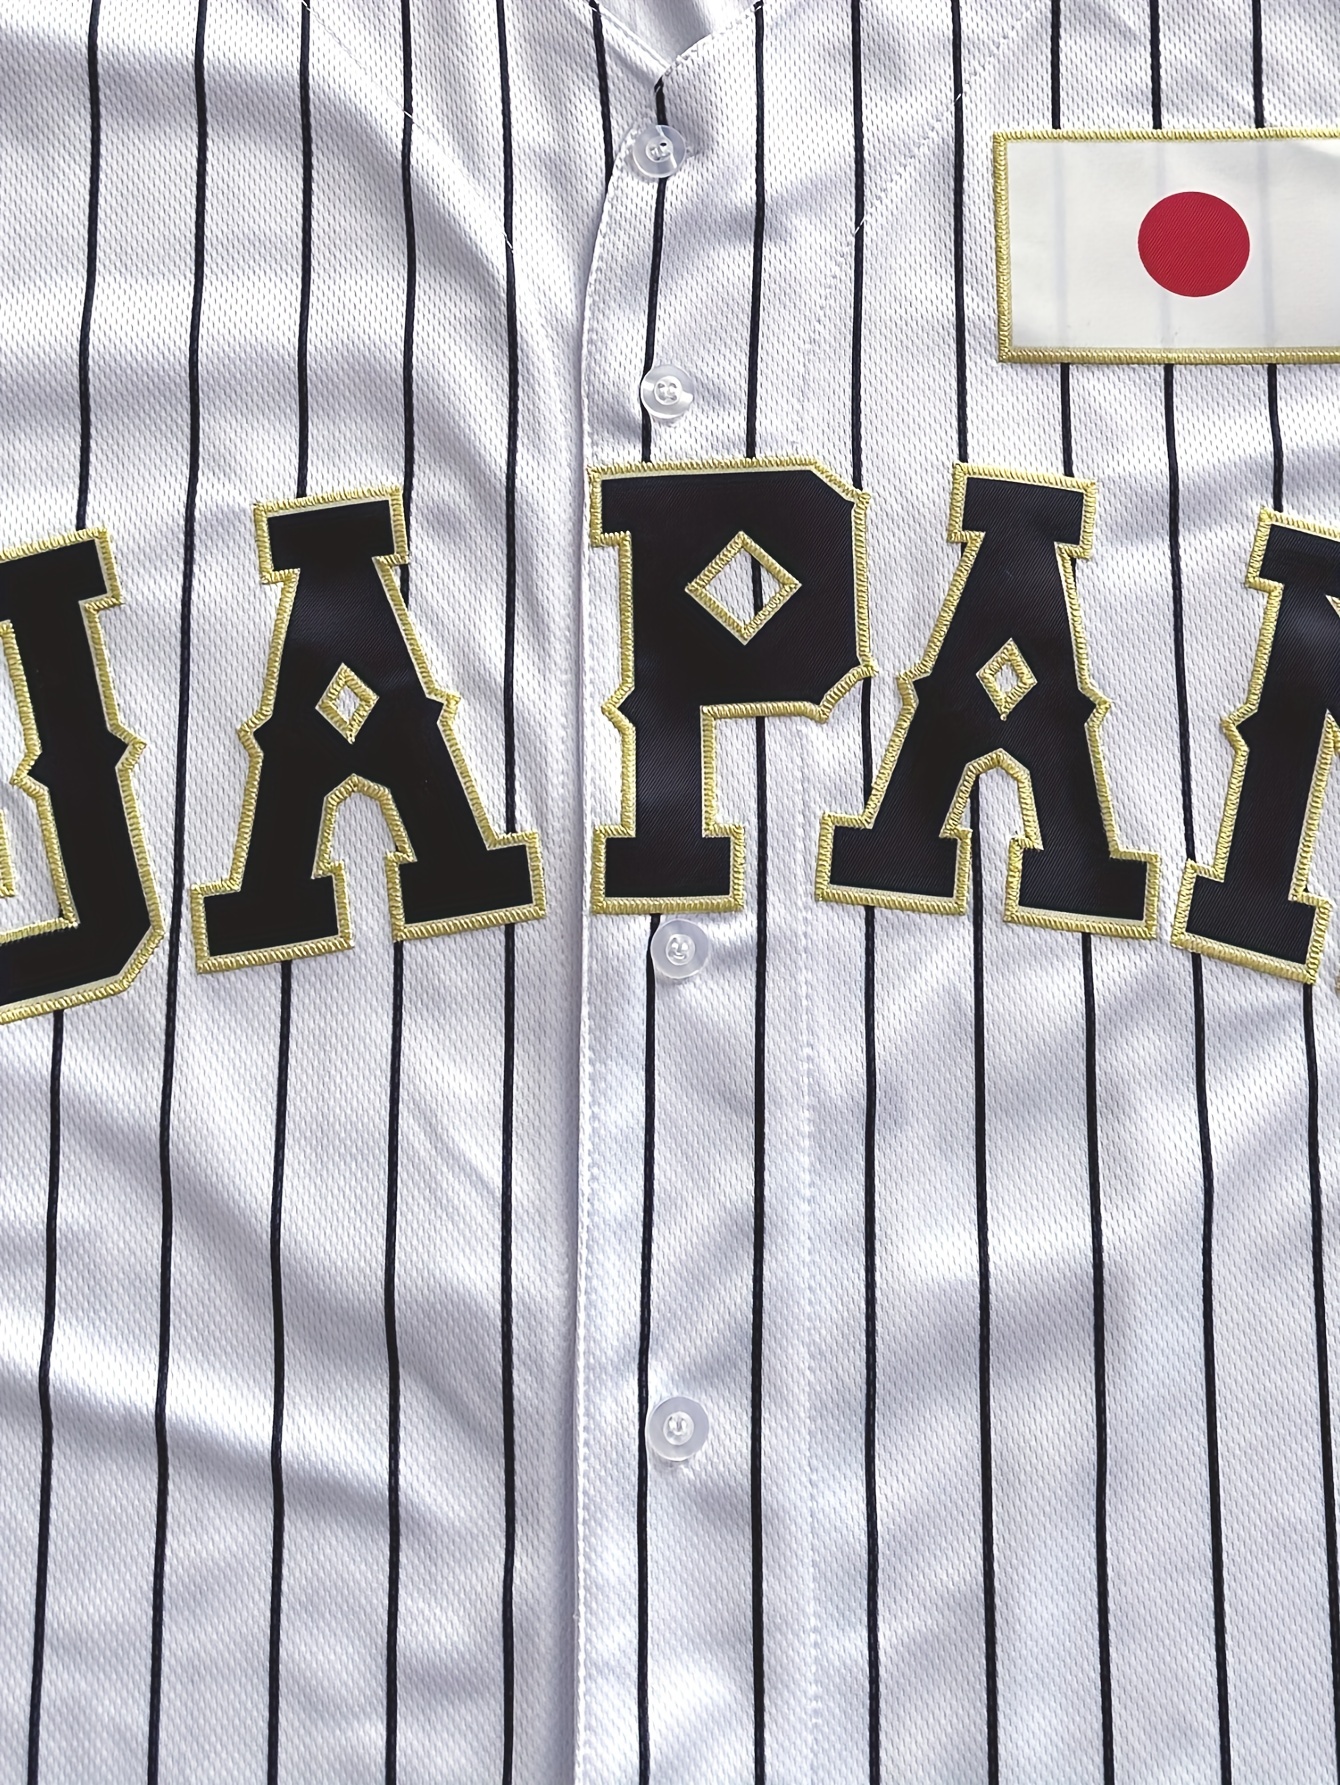  Ohtani #16 Team Japan Baseball Jerseys Sewn Samurai Black Gift  Jerseys (Small) : Sports & Outdoors